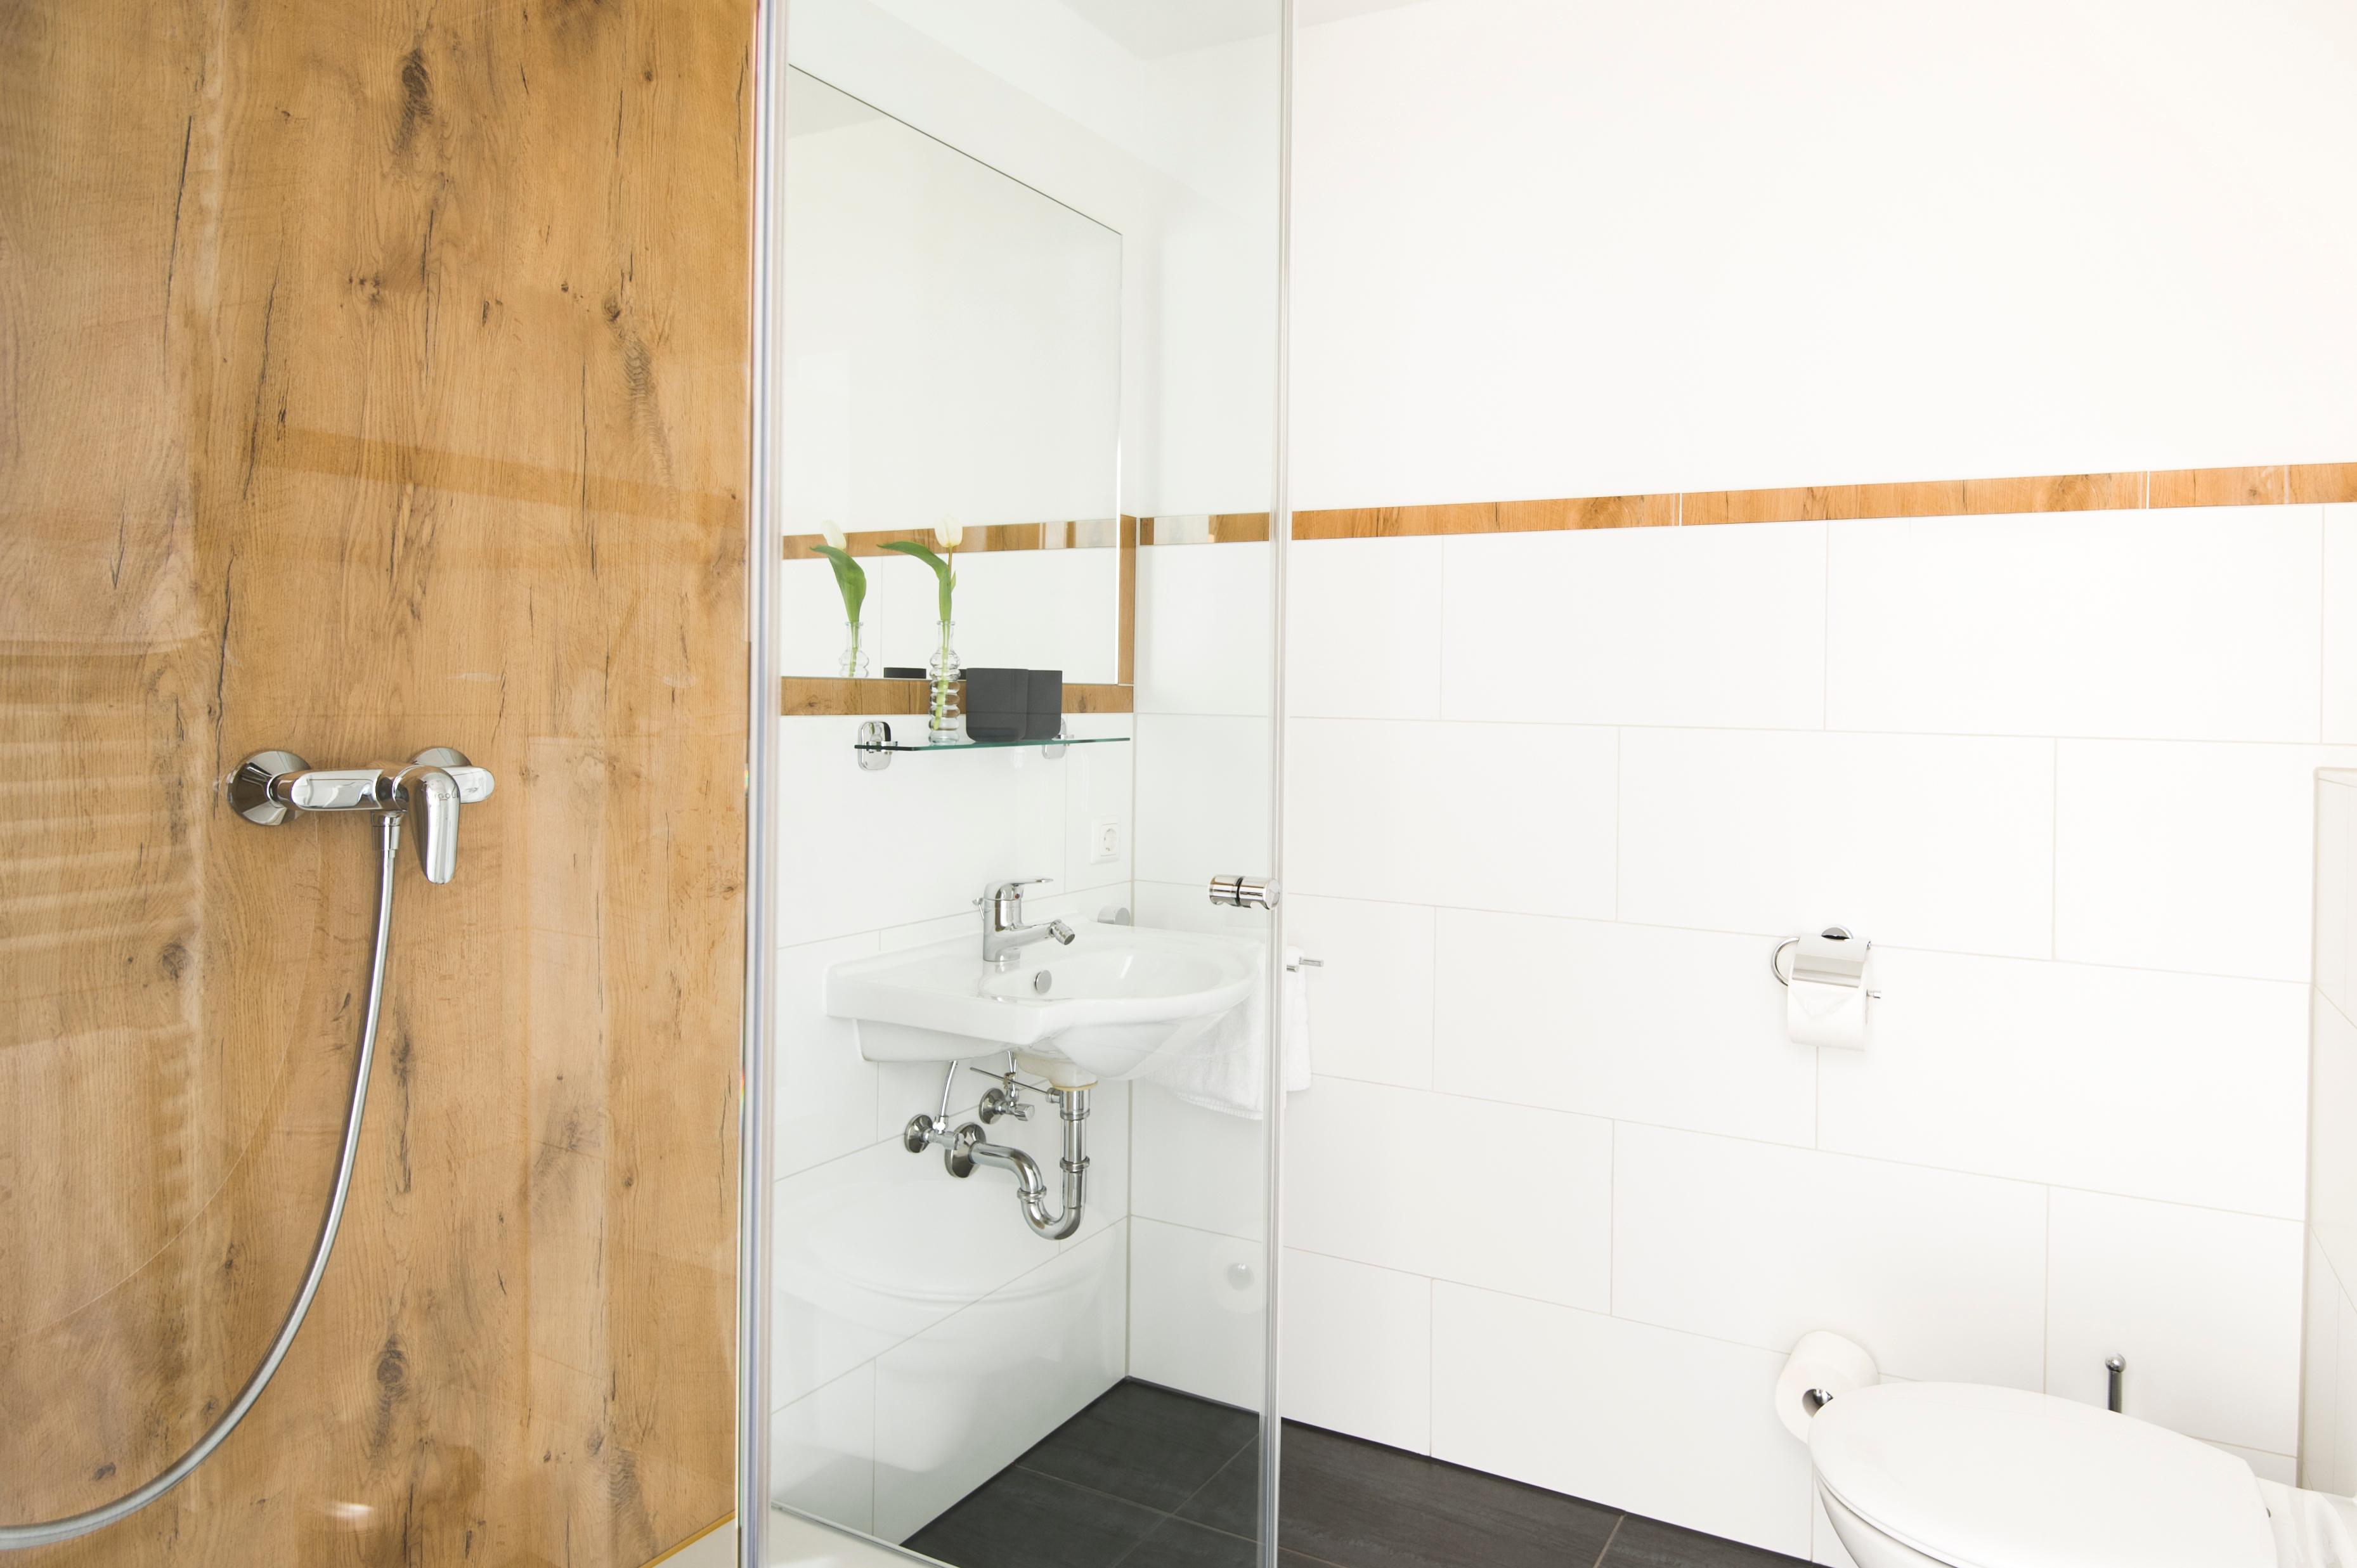 Glas Laminat Badezimmer mit Eichenoptik #badezimmer #laminat #duschrückwand ©Layerprint.de